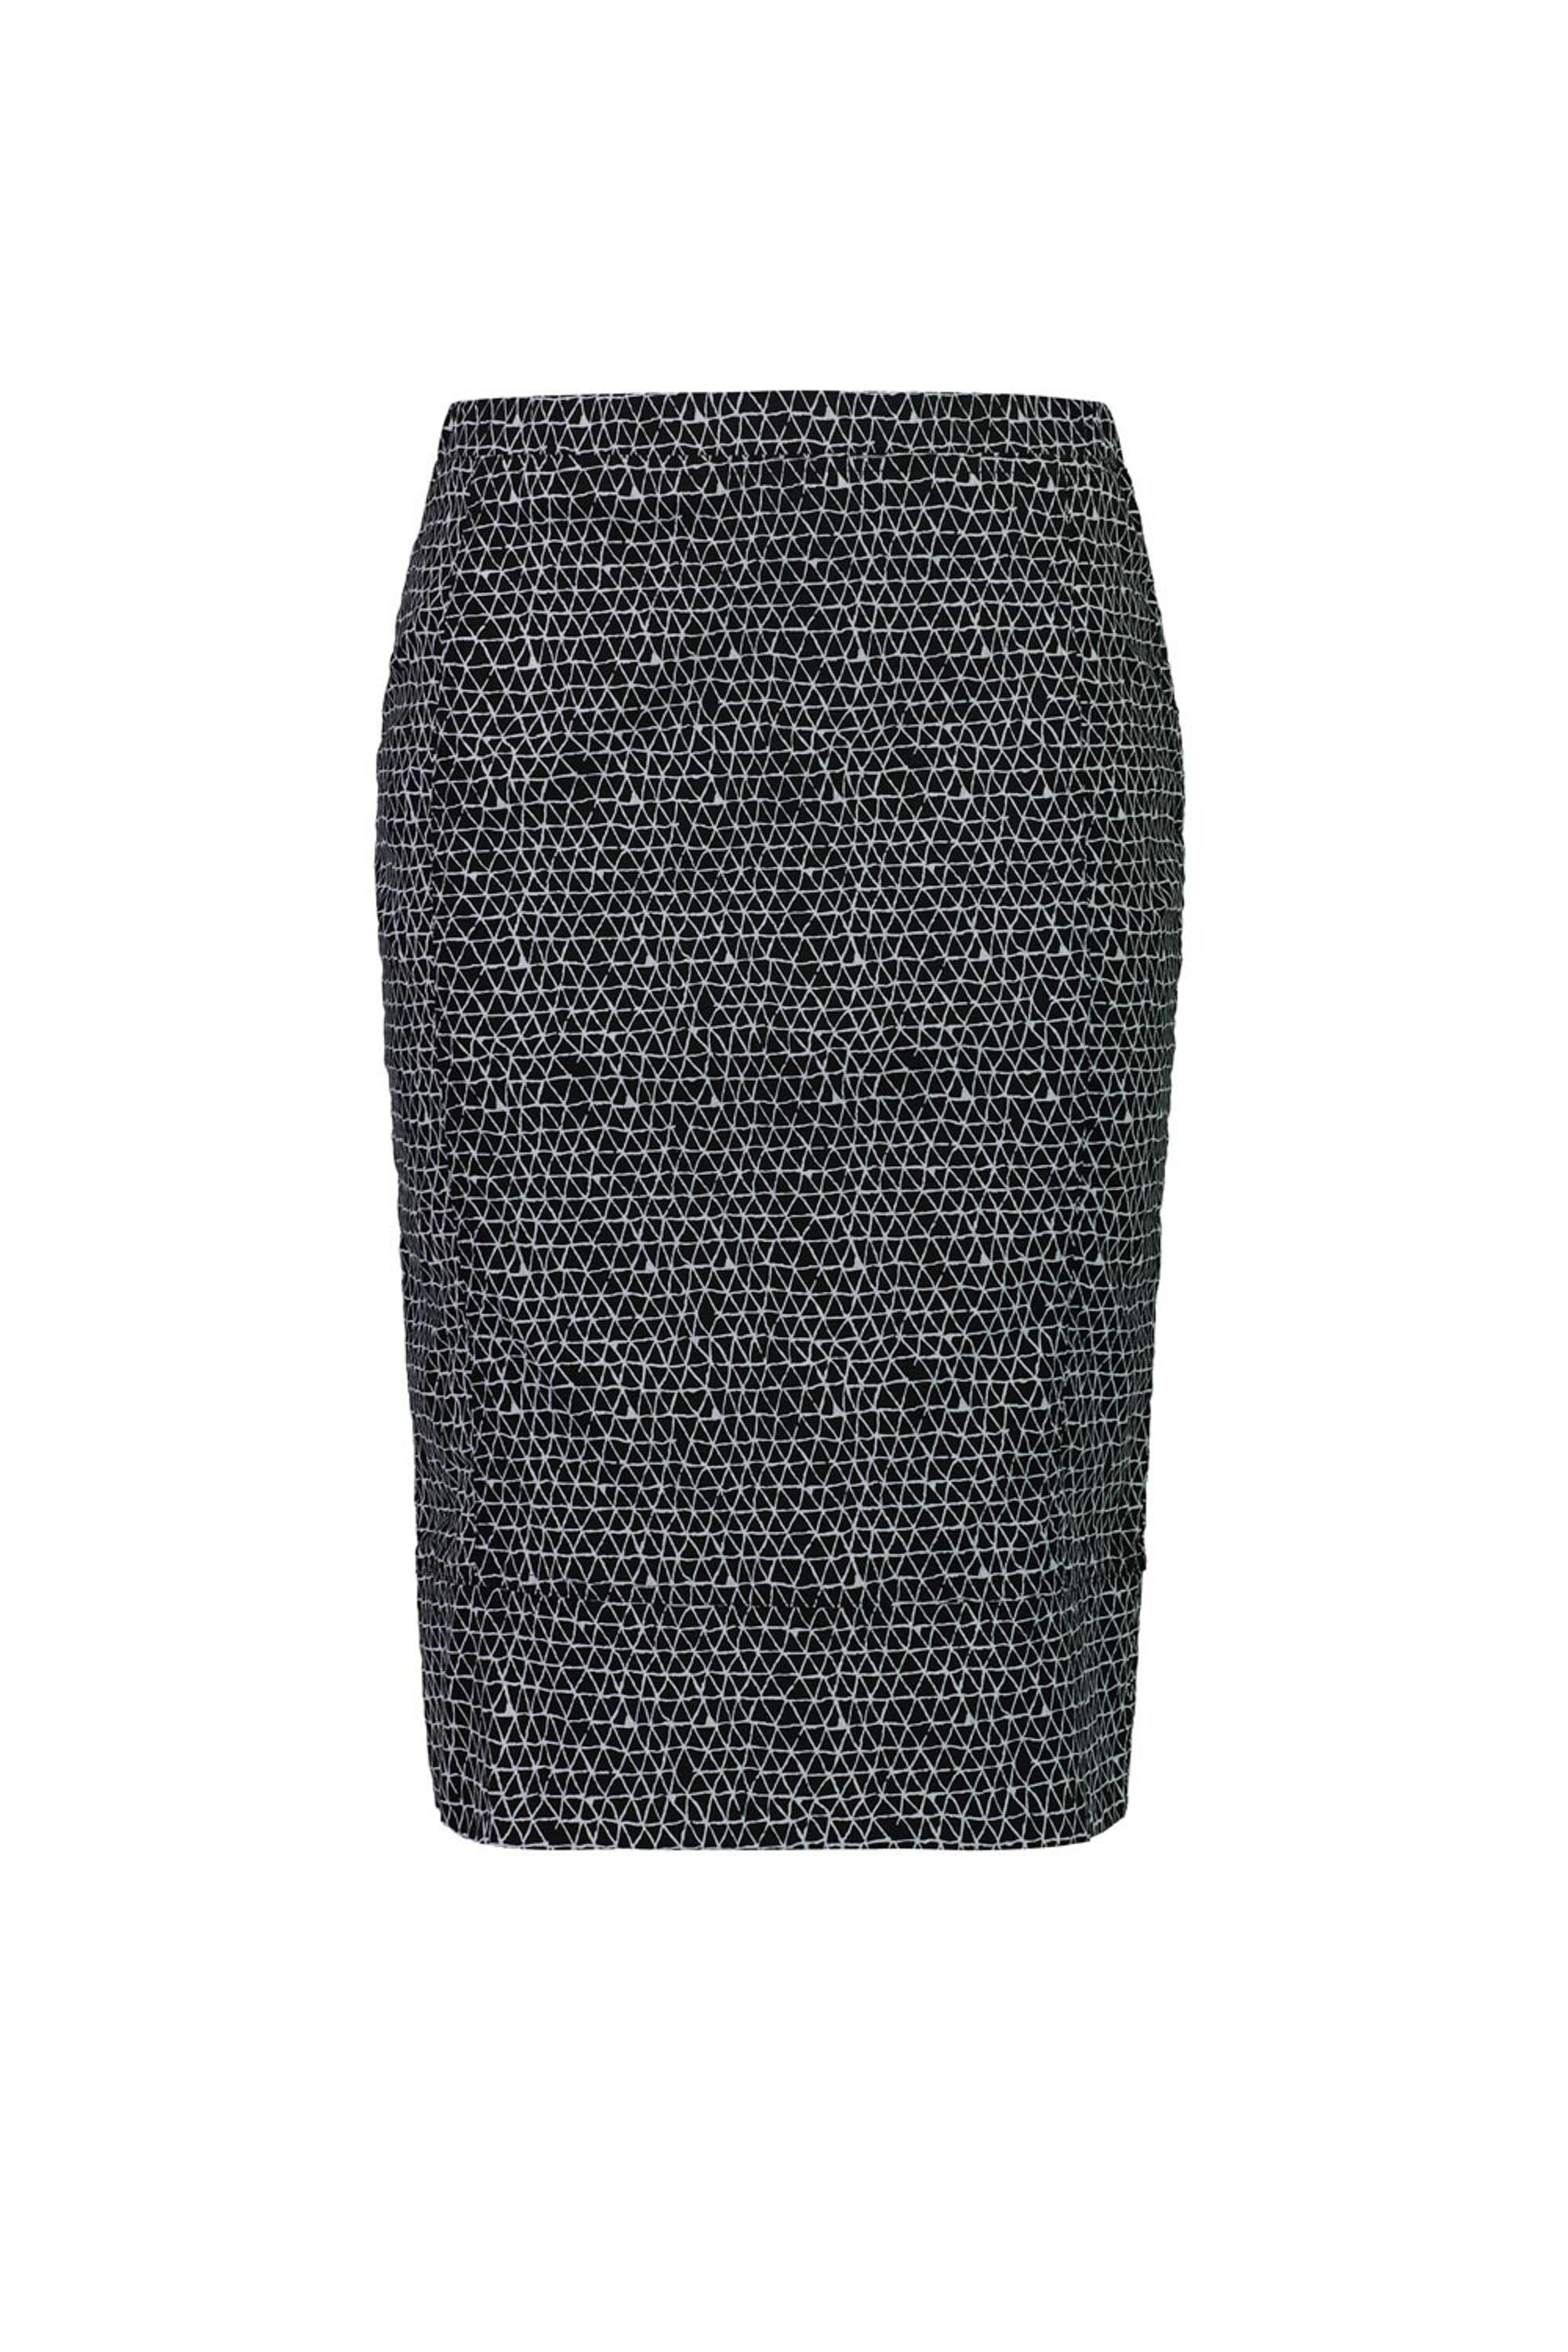 Verge ACROBAT WEAVE LAYER Skirt - Brand-Verge : Diahann Boutique ...